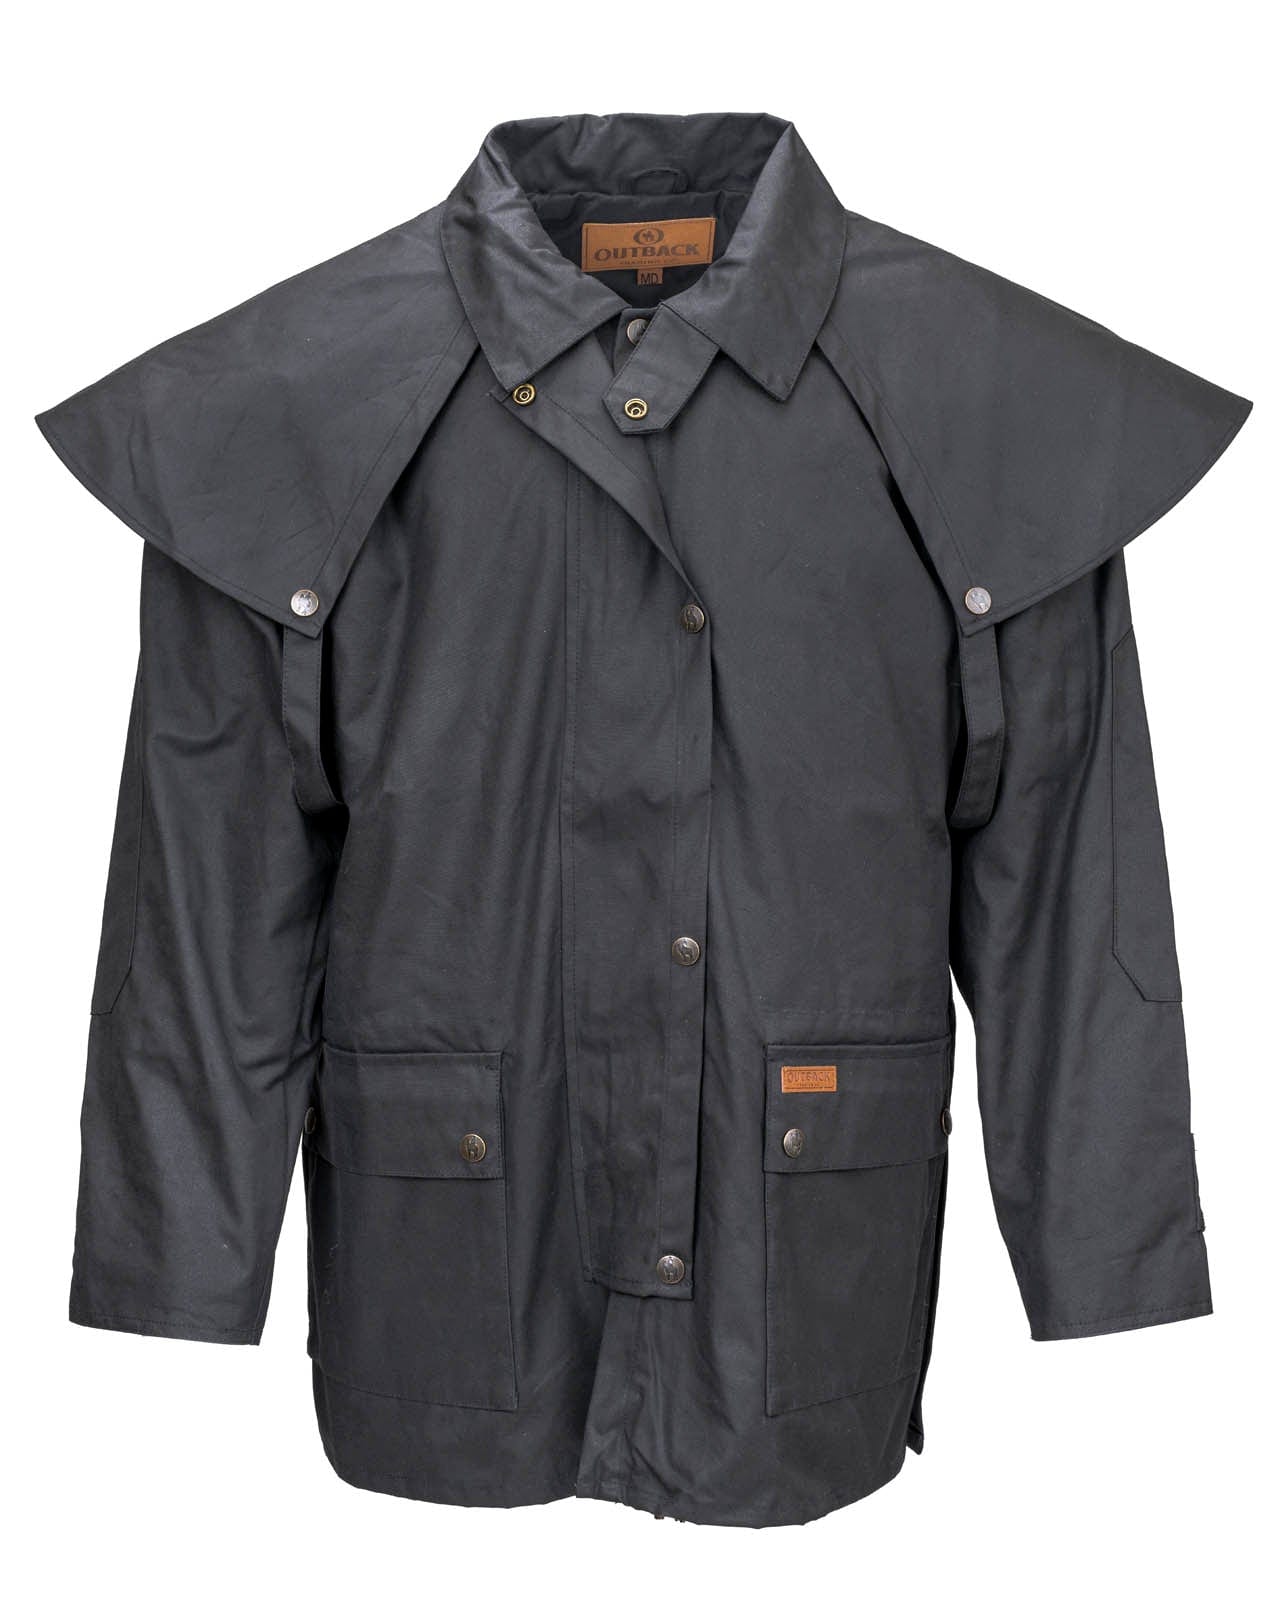 Bush Ranger Jacket | Jackets by Outback Trading Company ...